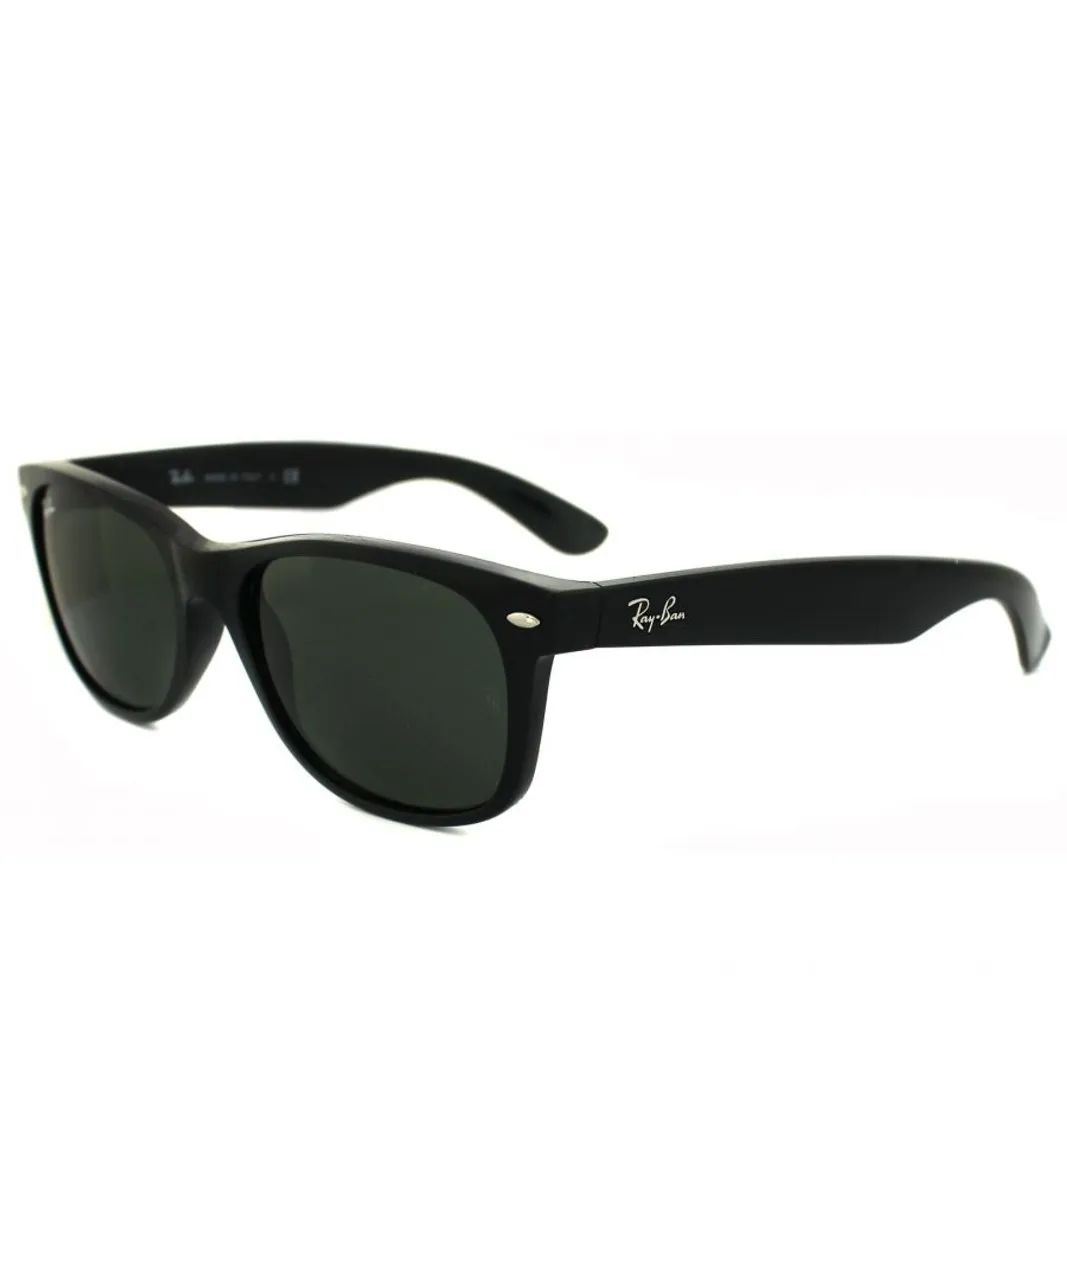 Ray-Ban Unisex Sunglasses New Wayfarer 2132 901L Black Green G-15 55mm - One